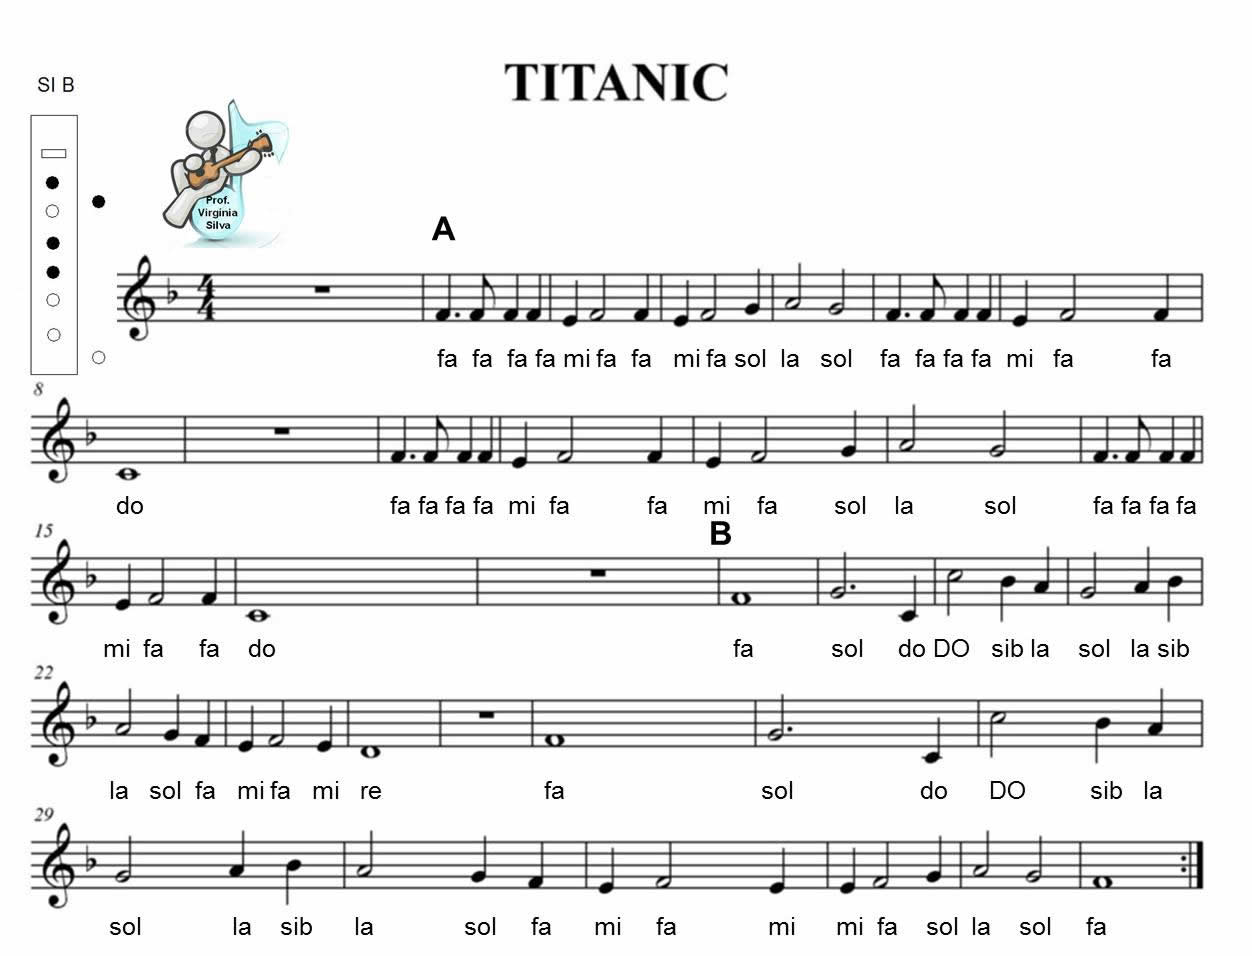 Flauta Doce Titanic Flauta Doce Tenho certeza que vai ser util. flauta doce titanic flauta doce